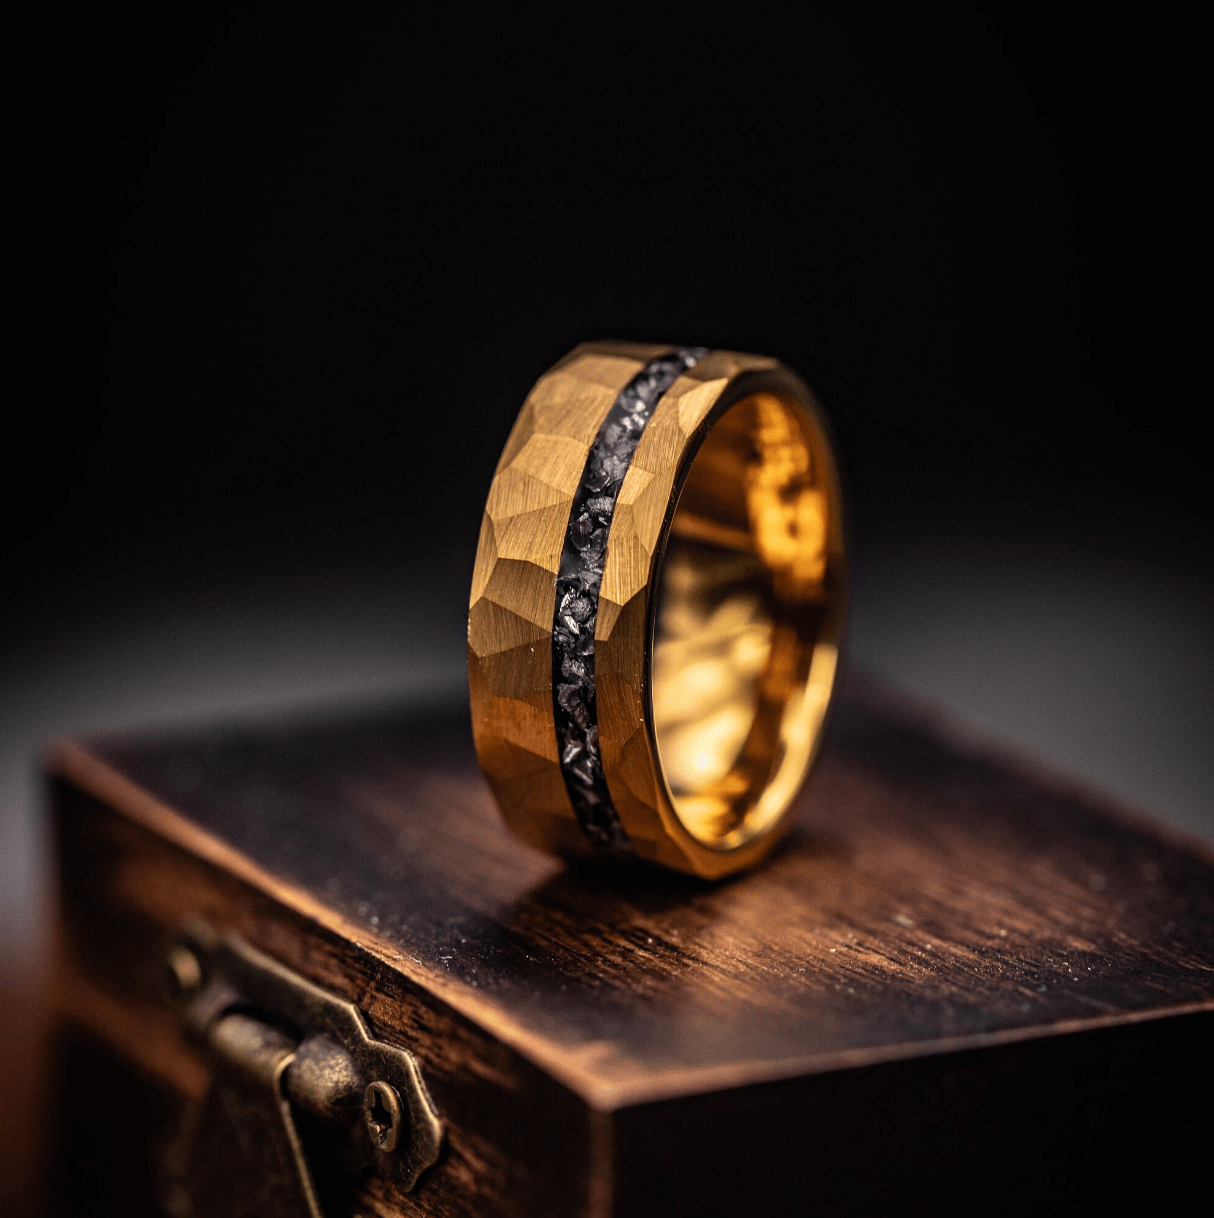 YELLOW GOLD METEORITE Hammered Ring, Gold Hammered Wedding Band w. Real Meteorite Inlay, Yellow 18K Gold, Mens Ring, Meteorite Ring